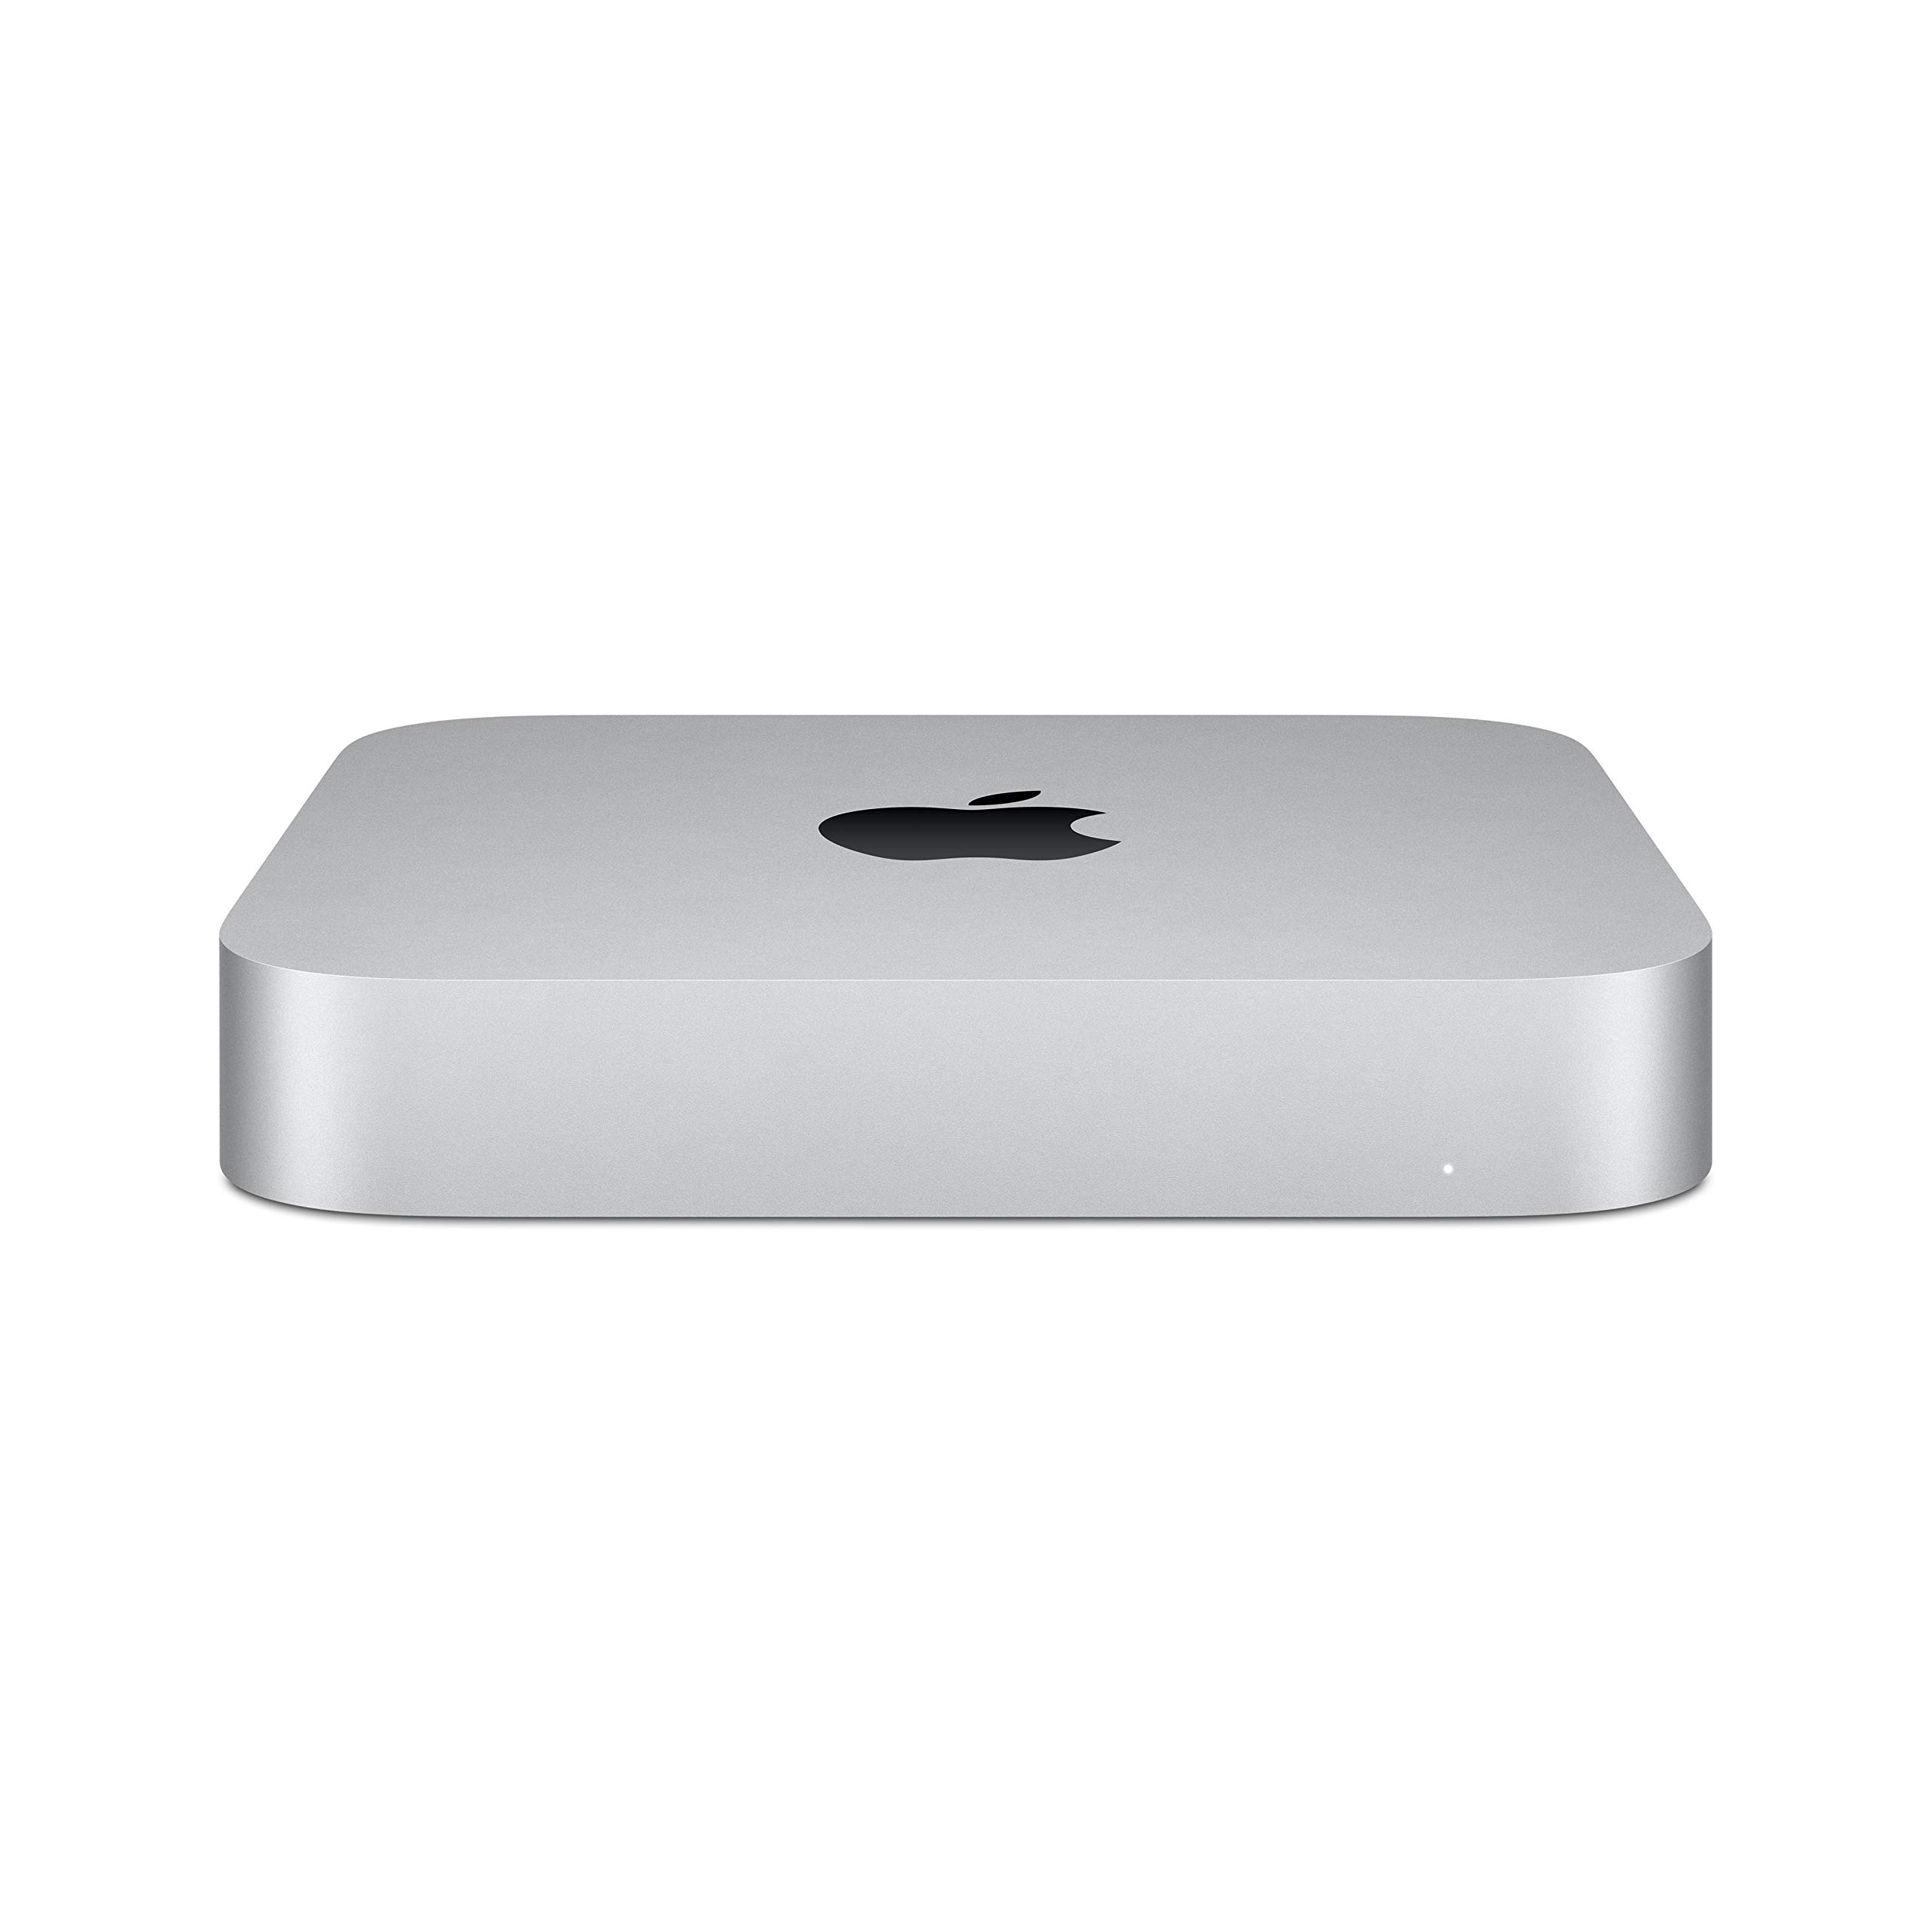 2020 Apple Mac Mini with Apple M1 Chip (8GB RAM, 256GB SSD Storage) $569.99 at Amazon